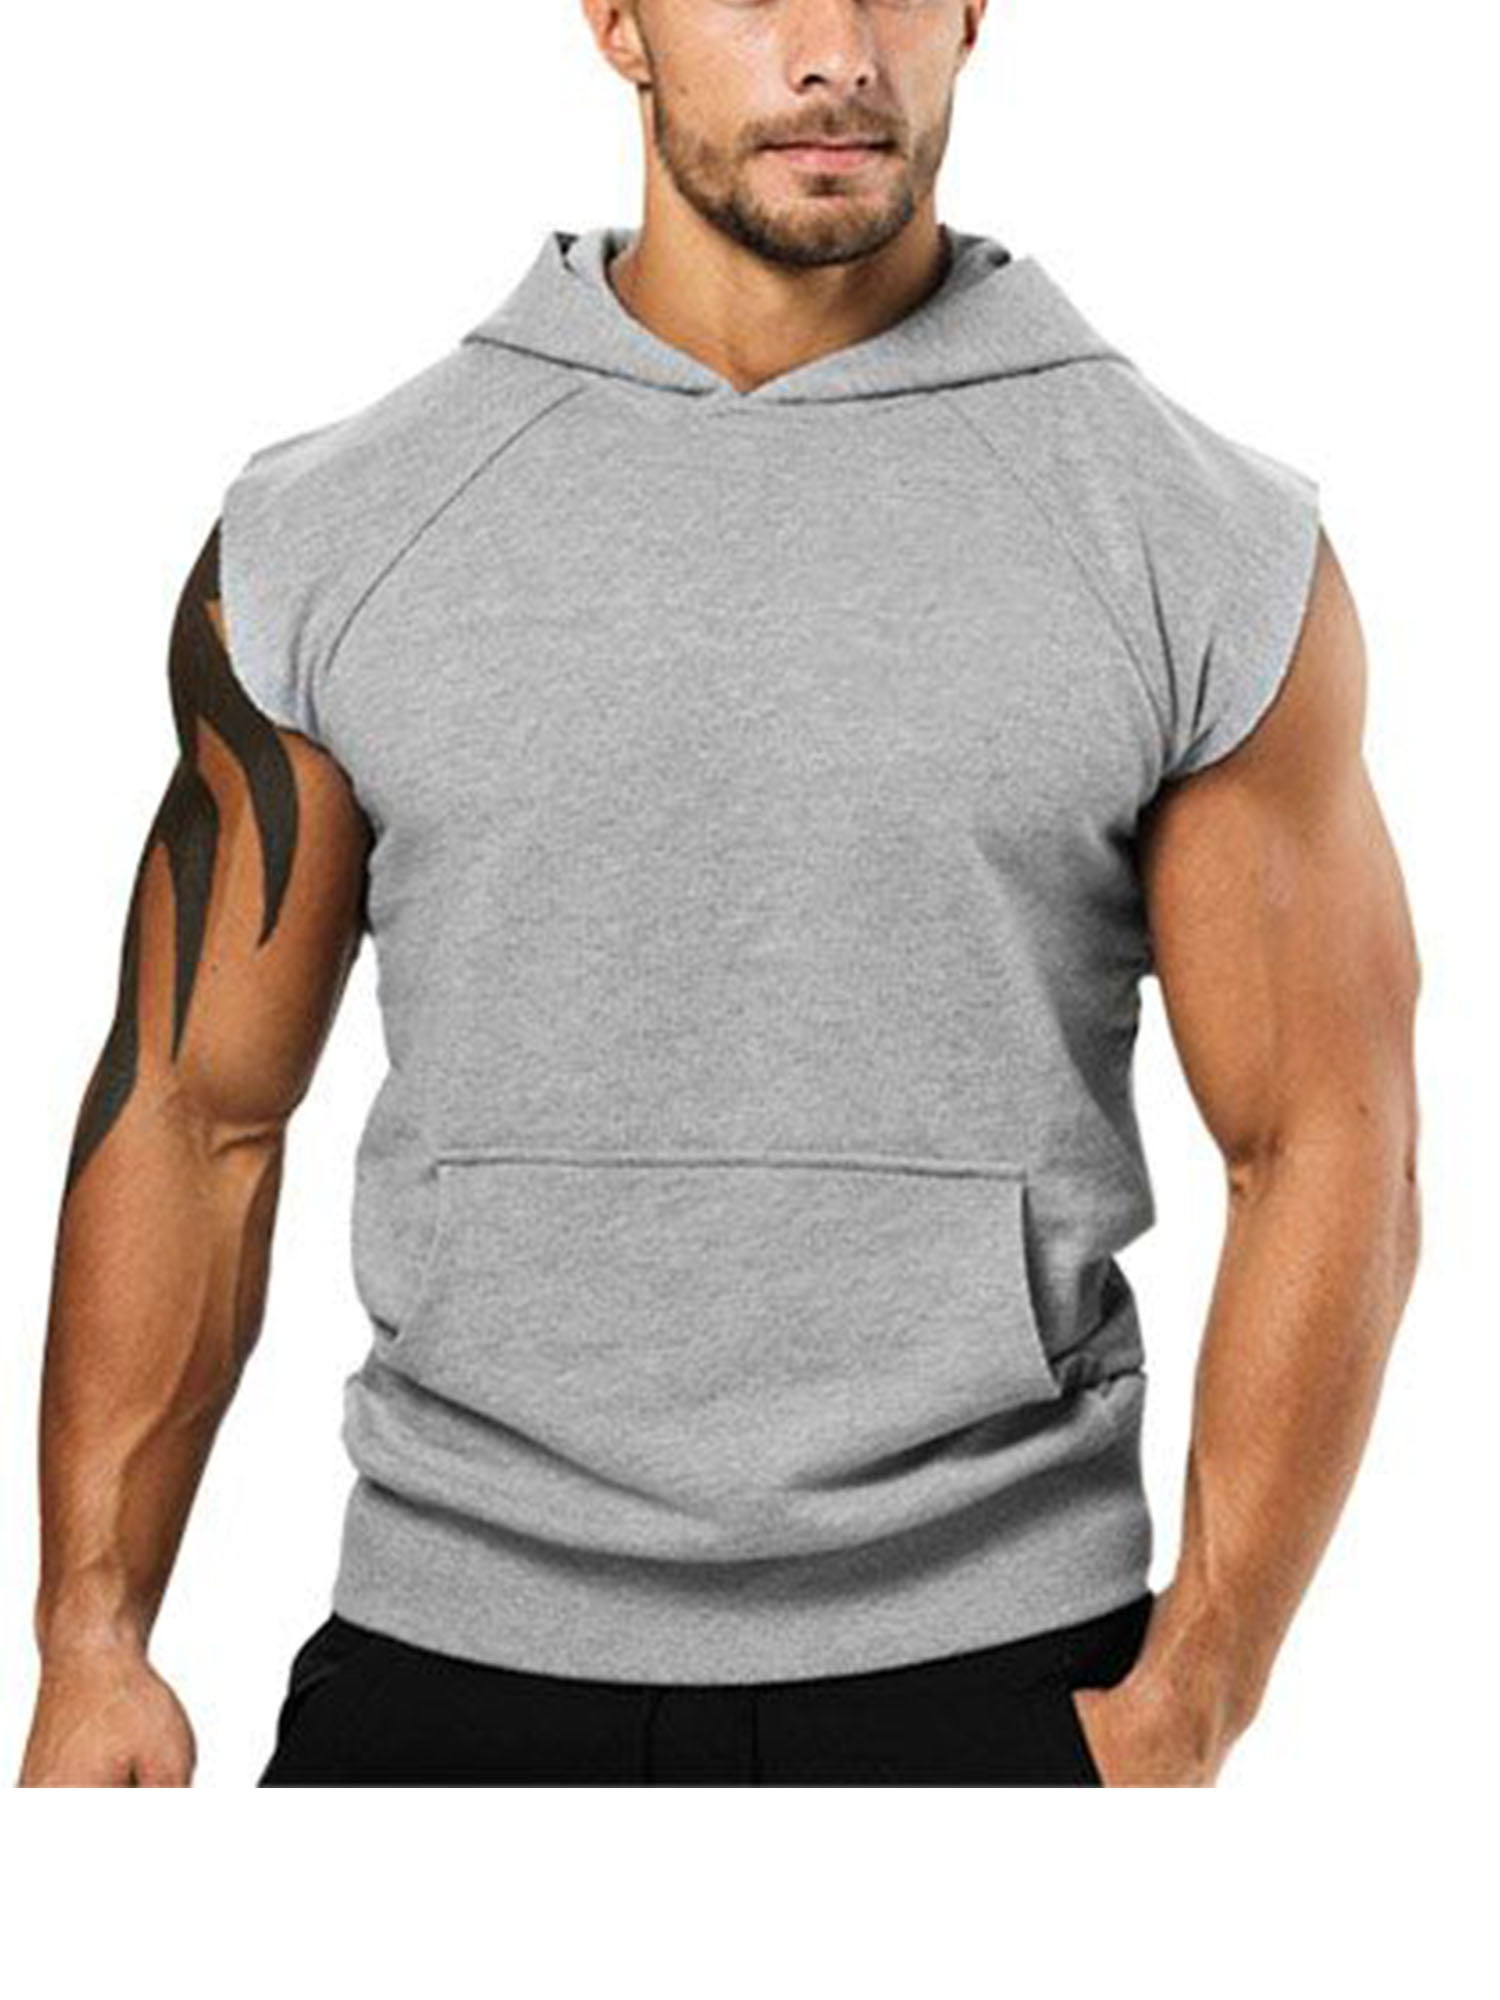 Men Tank Top Summer Fashion 3D Colourful Printing Sleeveless Shirt Leisure Beach Sports Vest Tops Slimming Body Shaper Vest Bodybuilding Tops Undershirt